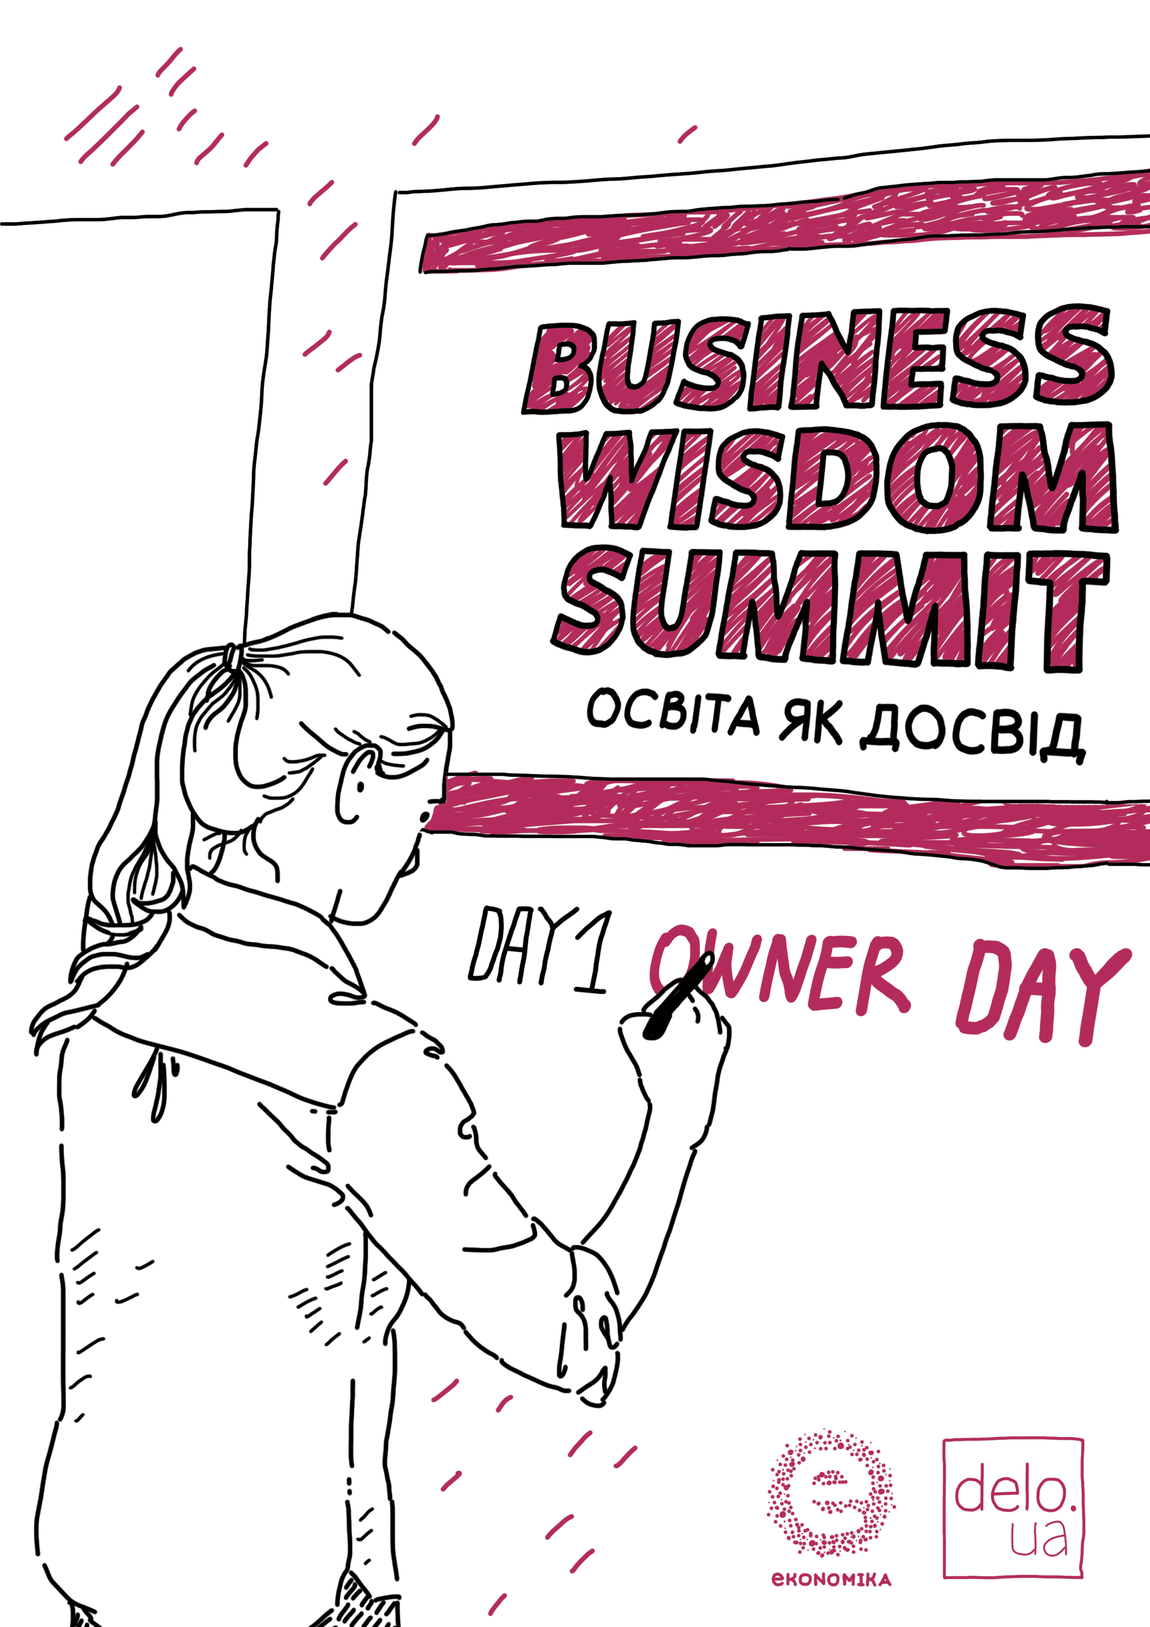 Business Wisdom Summit удивит участников артскрайбингом